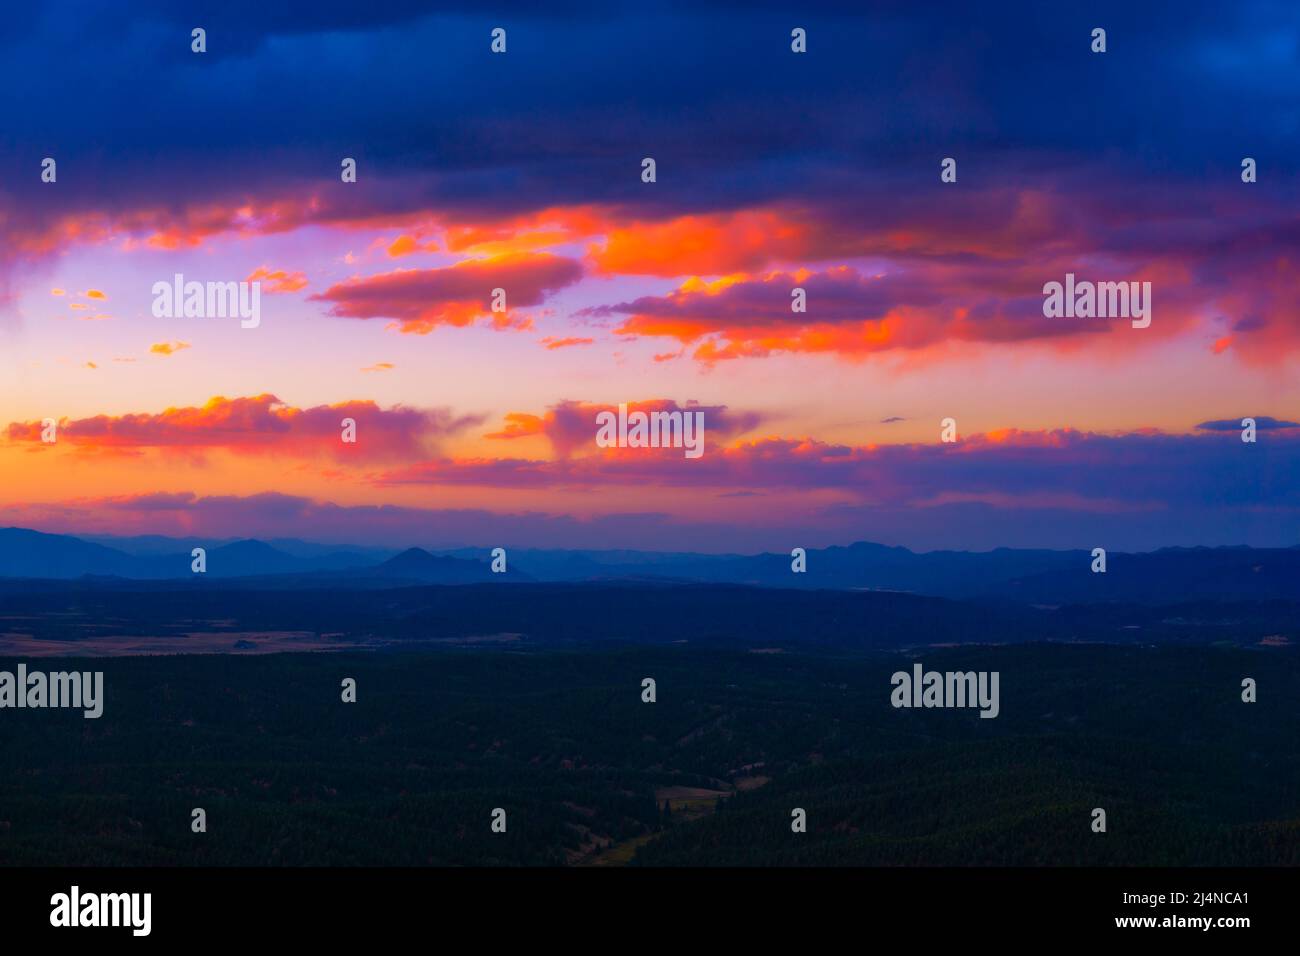 Vivid Sunset Sunrise Clouds Over Vast Scenic View Landscape Stock Photo